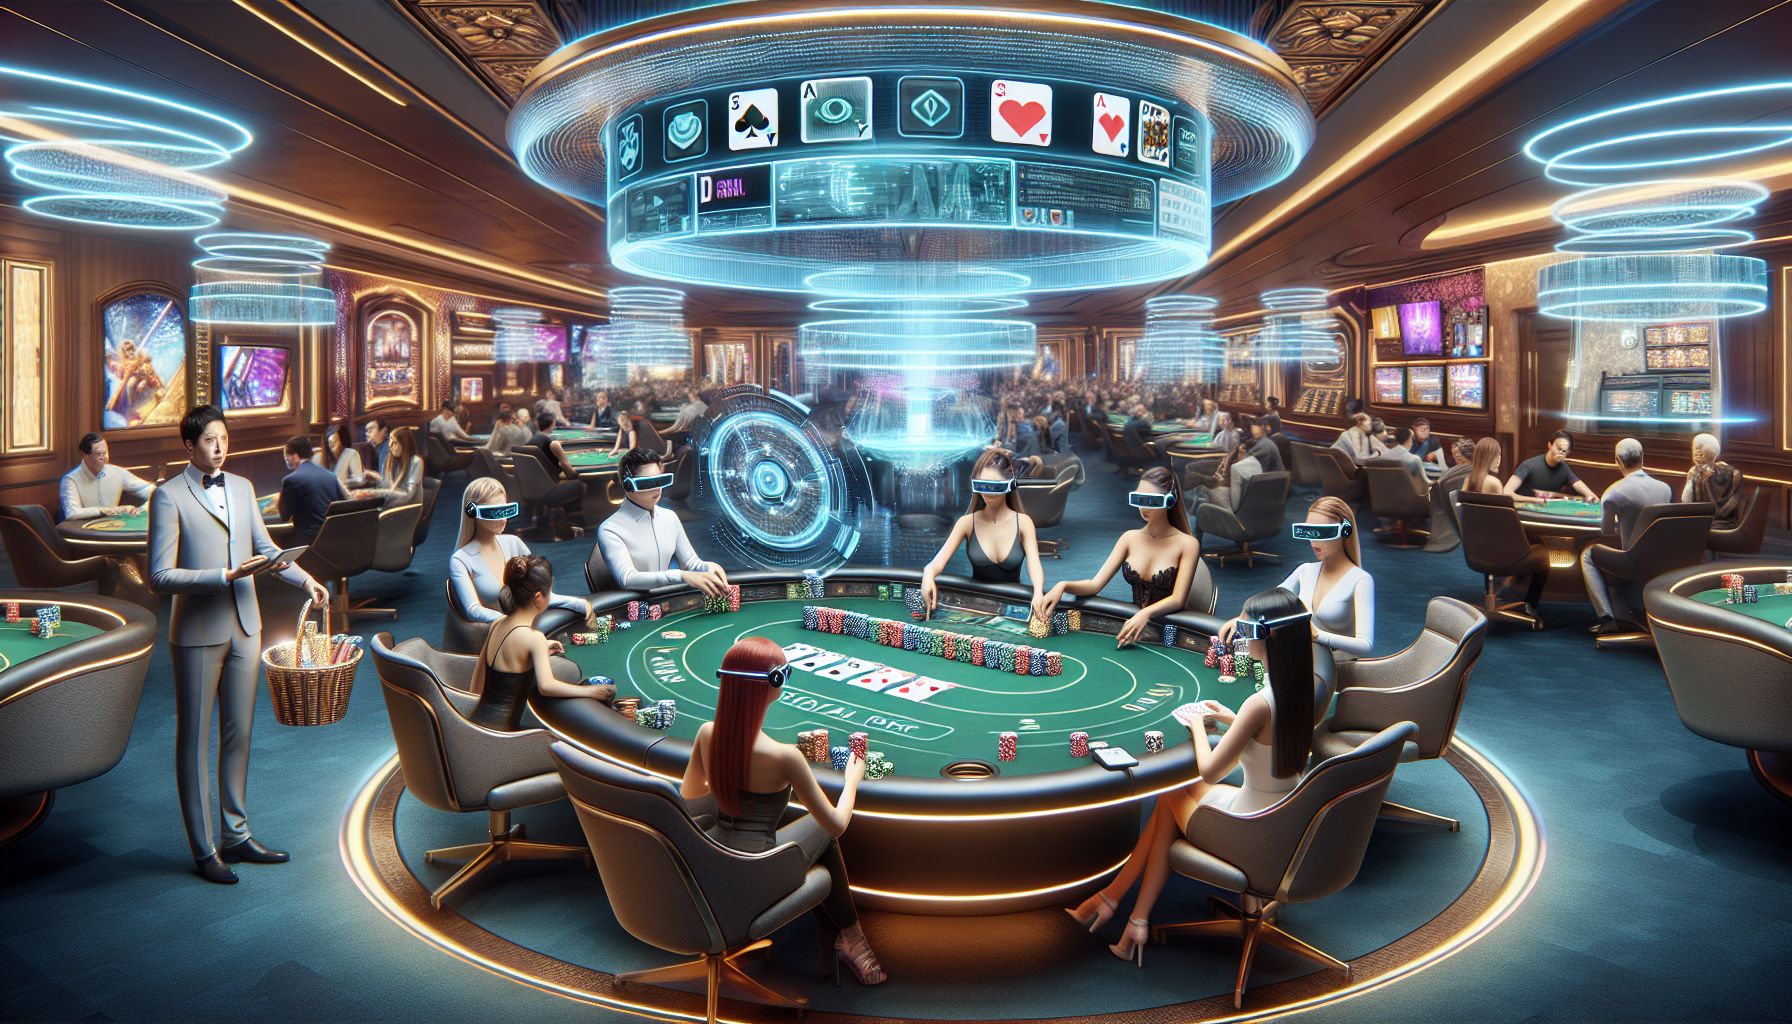 Mastering the Art of Casino Poker: Essential Strategies for Winning